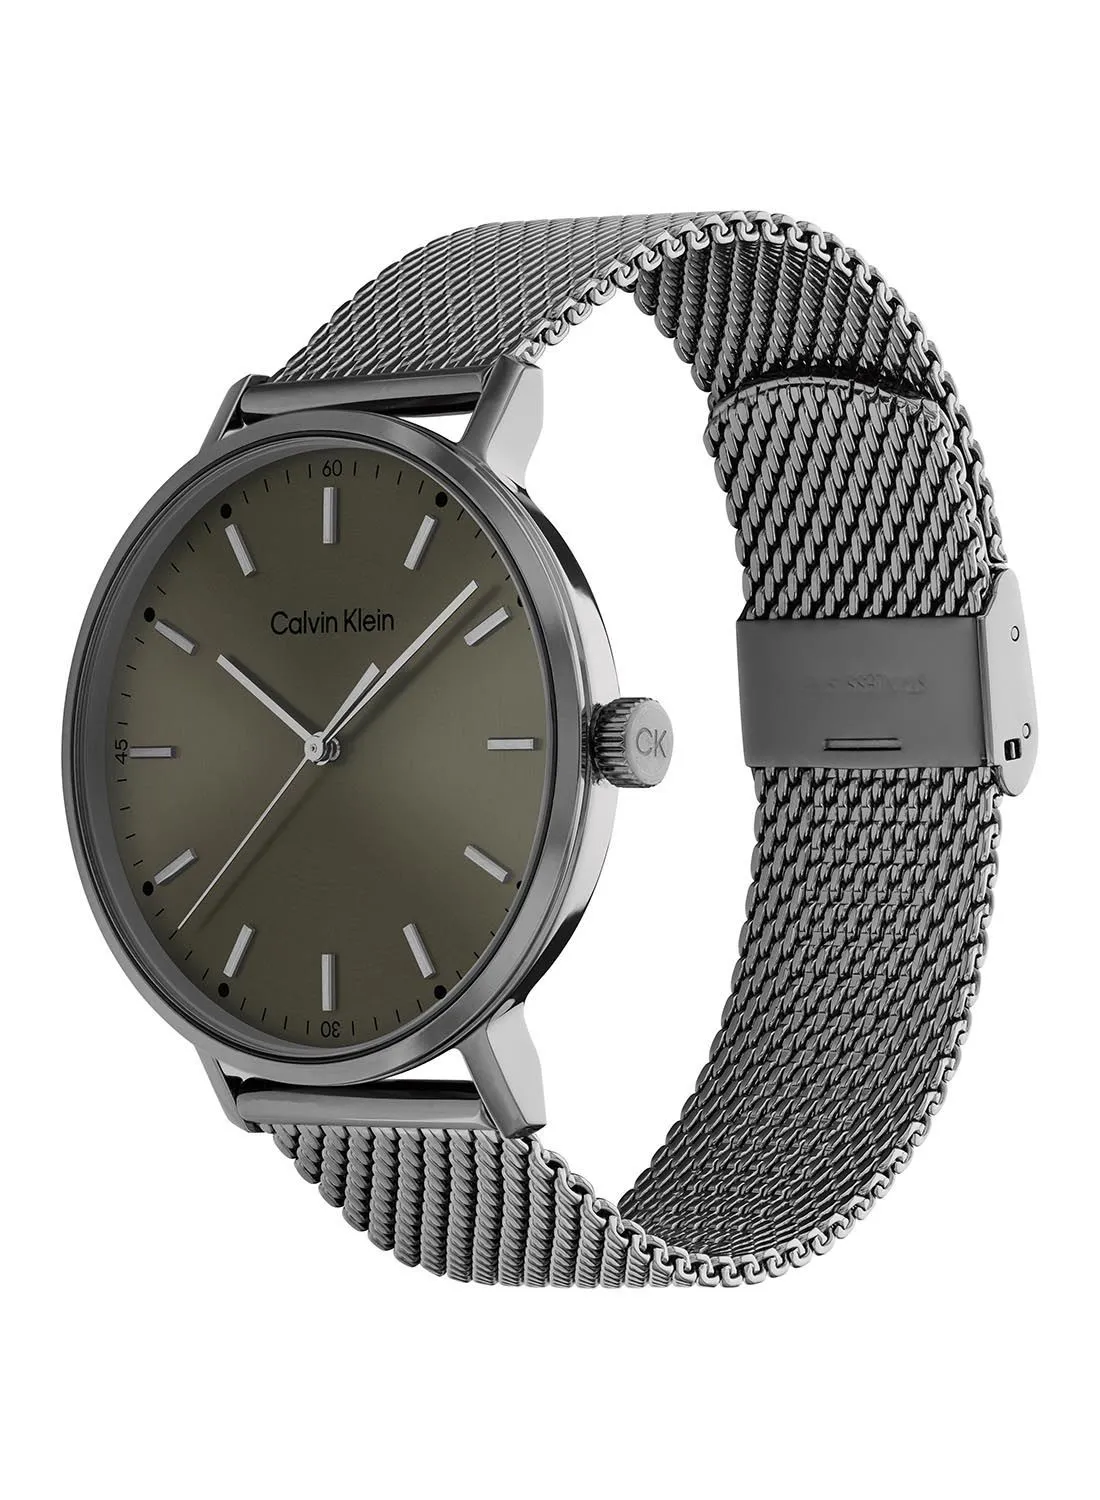 CALVIN KLEIN Analog Round Waterproof  Wrist Watch With Stainless Steel 25200048